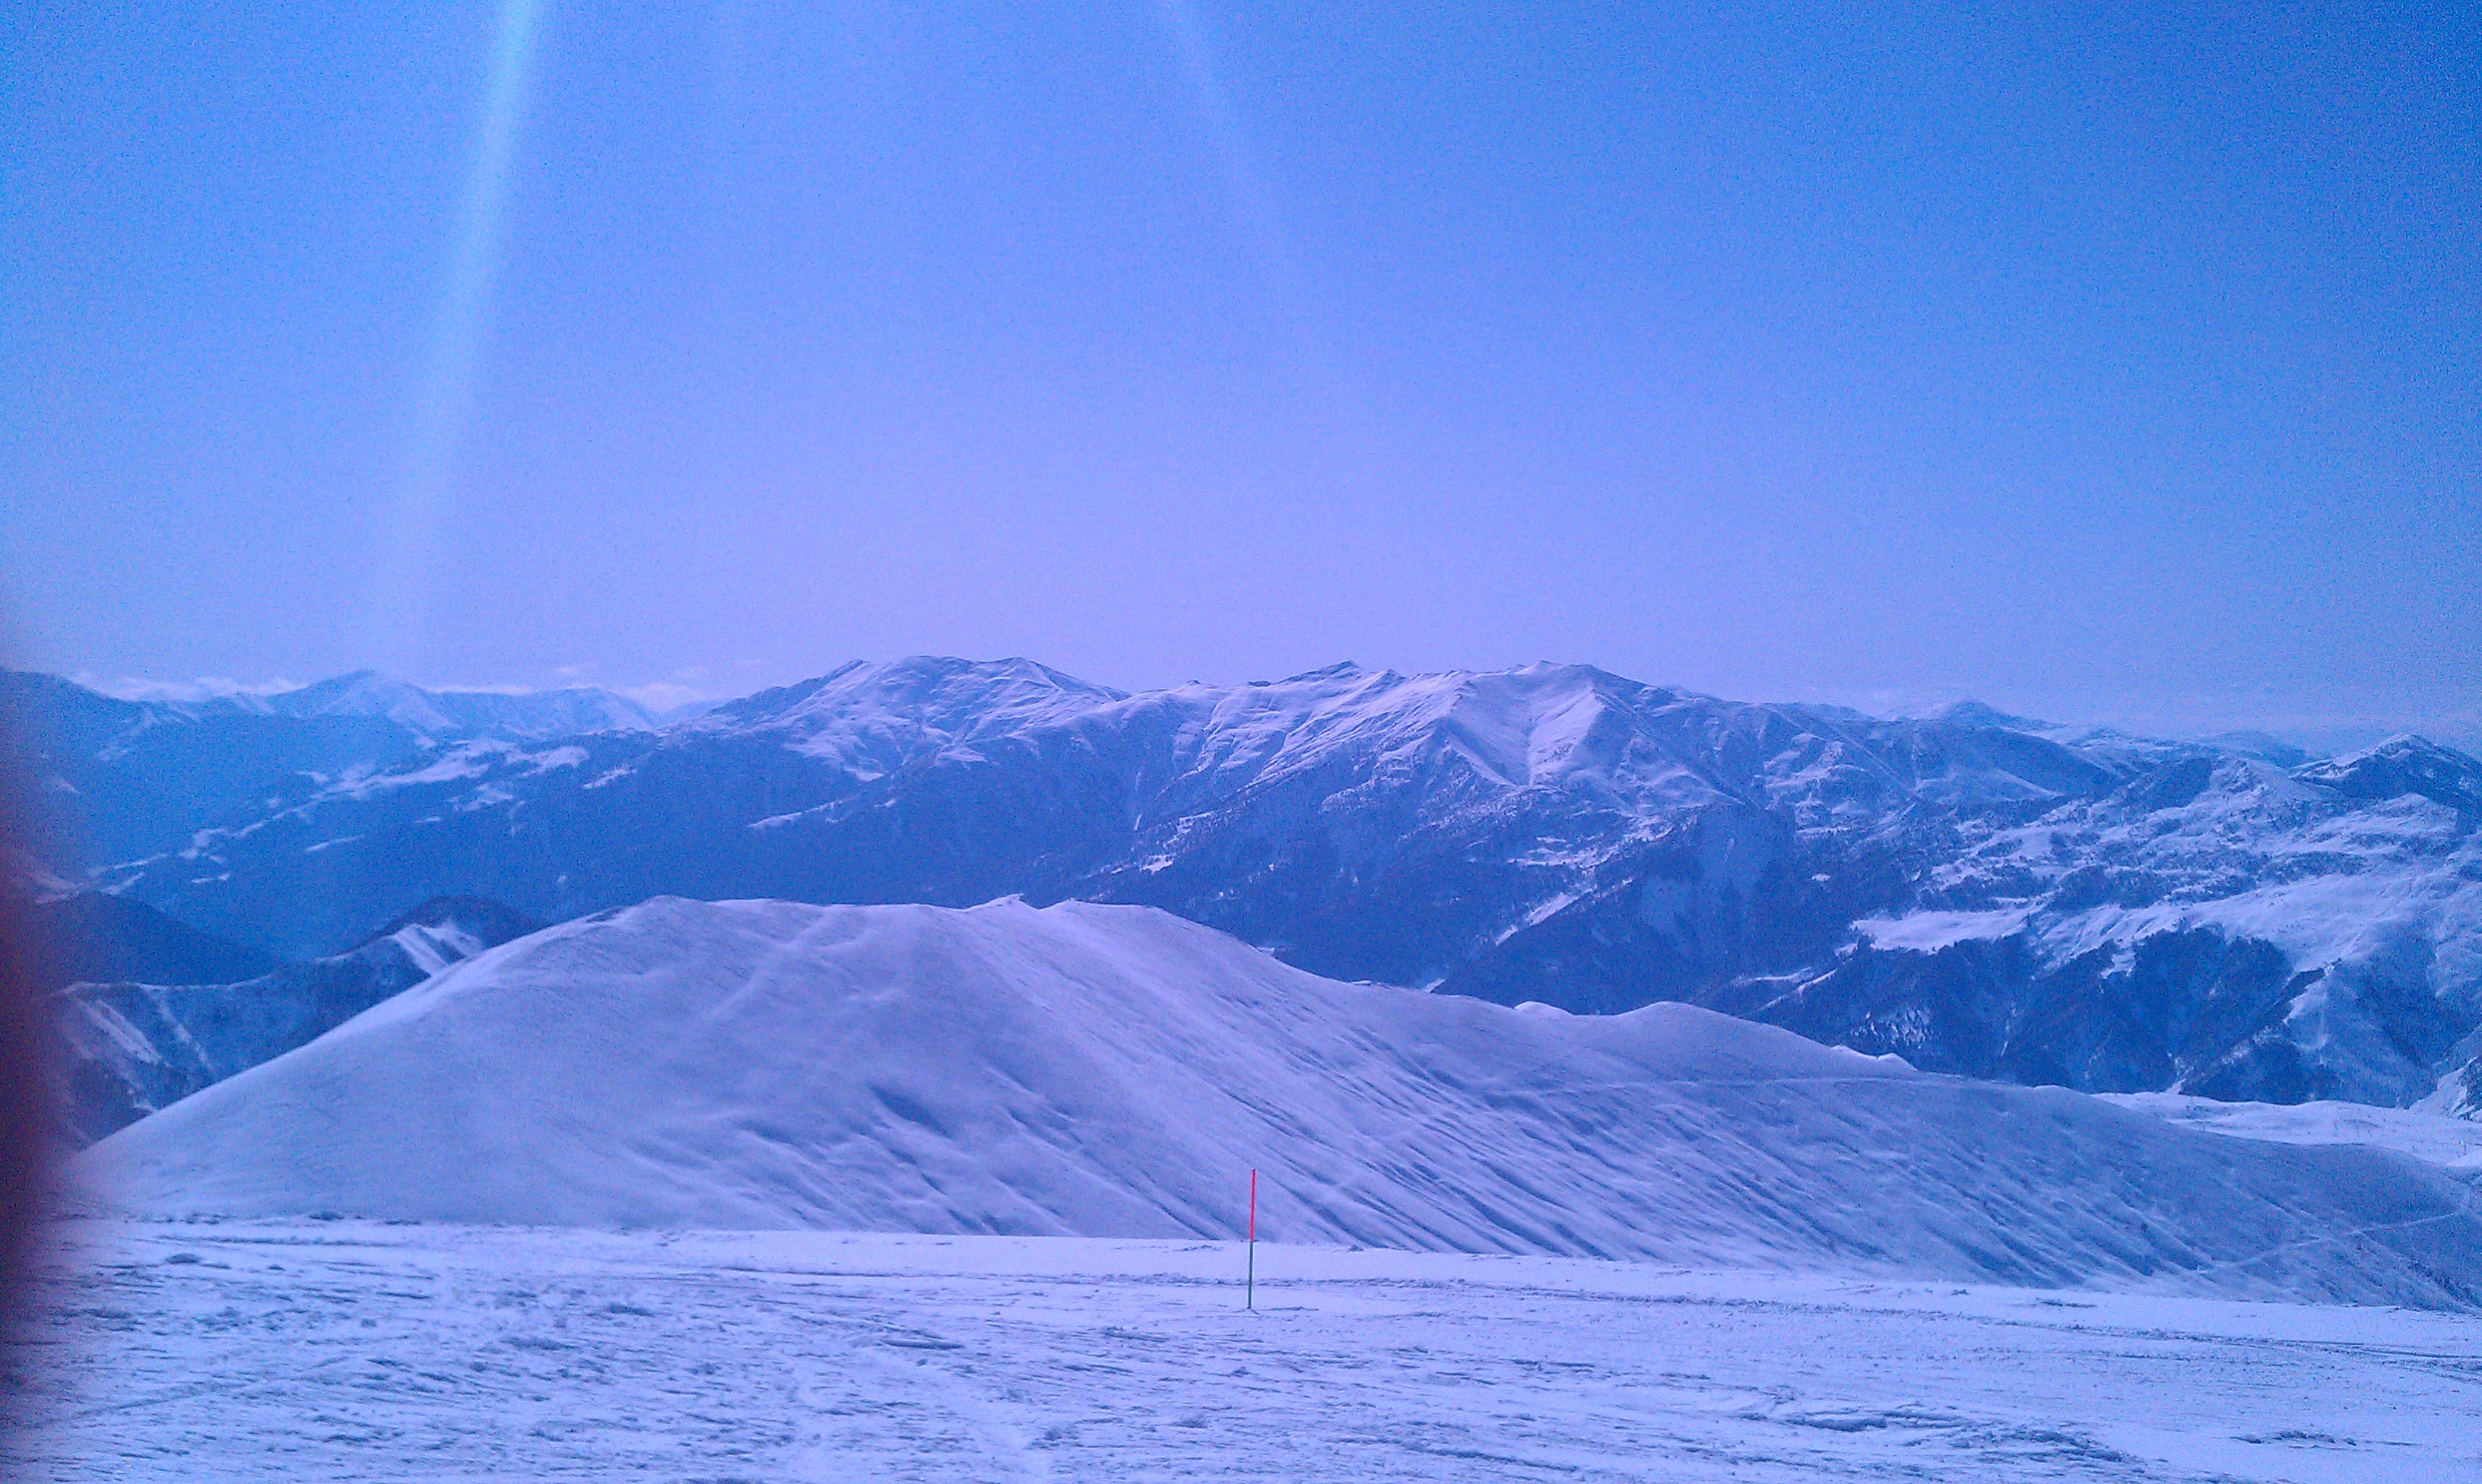 That is what it looks like when you ski down, Gudauri